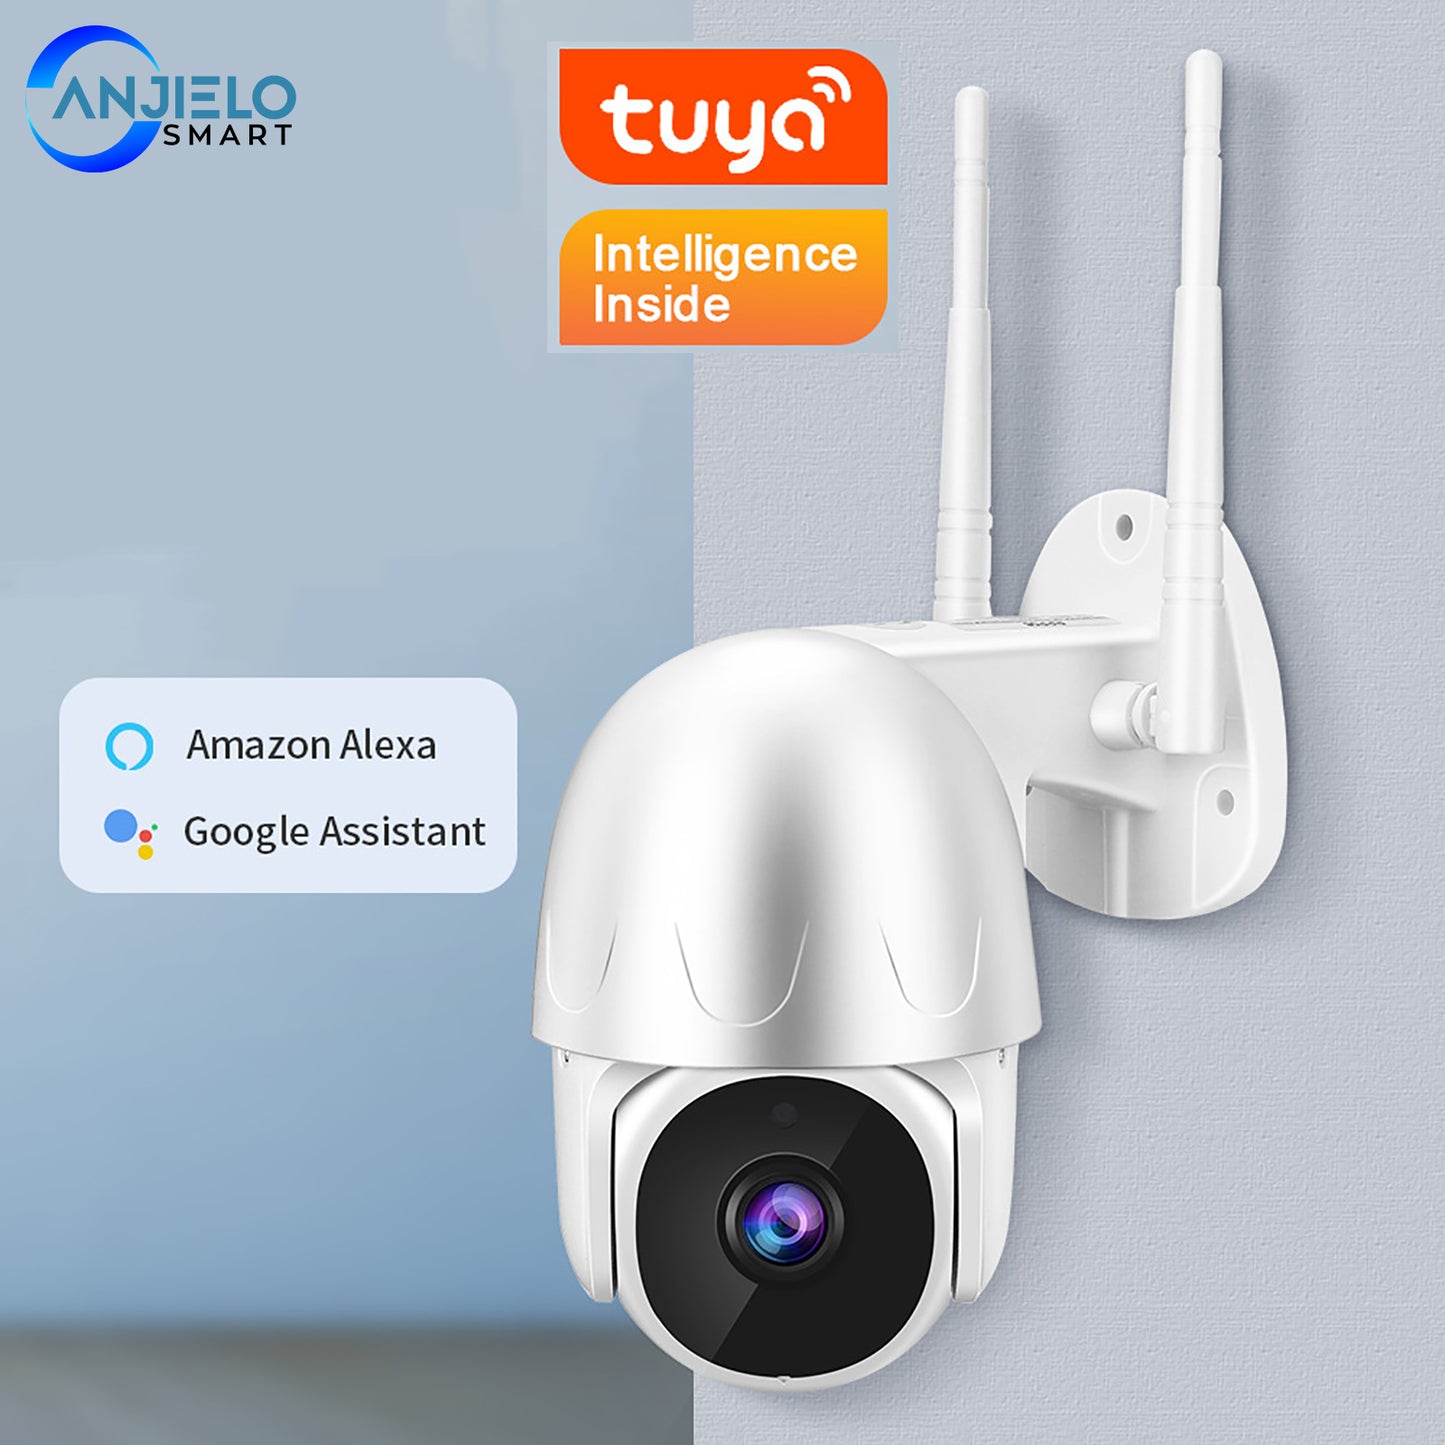 AnjieloSmart Tuya Smart Security Camera HD 1080P WiFi IP Dome Camera Outdoor